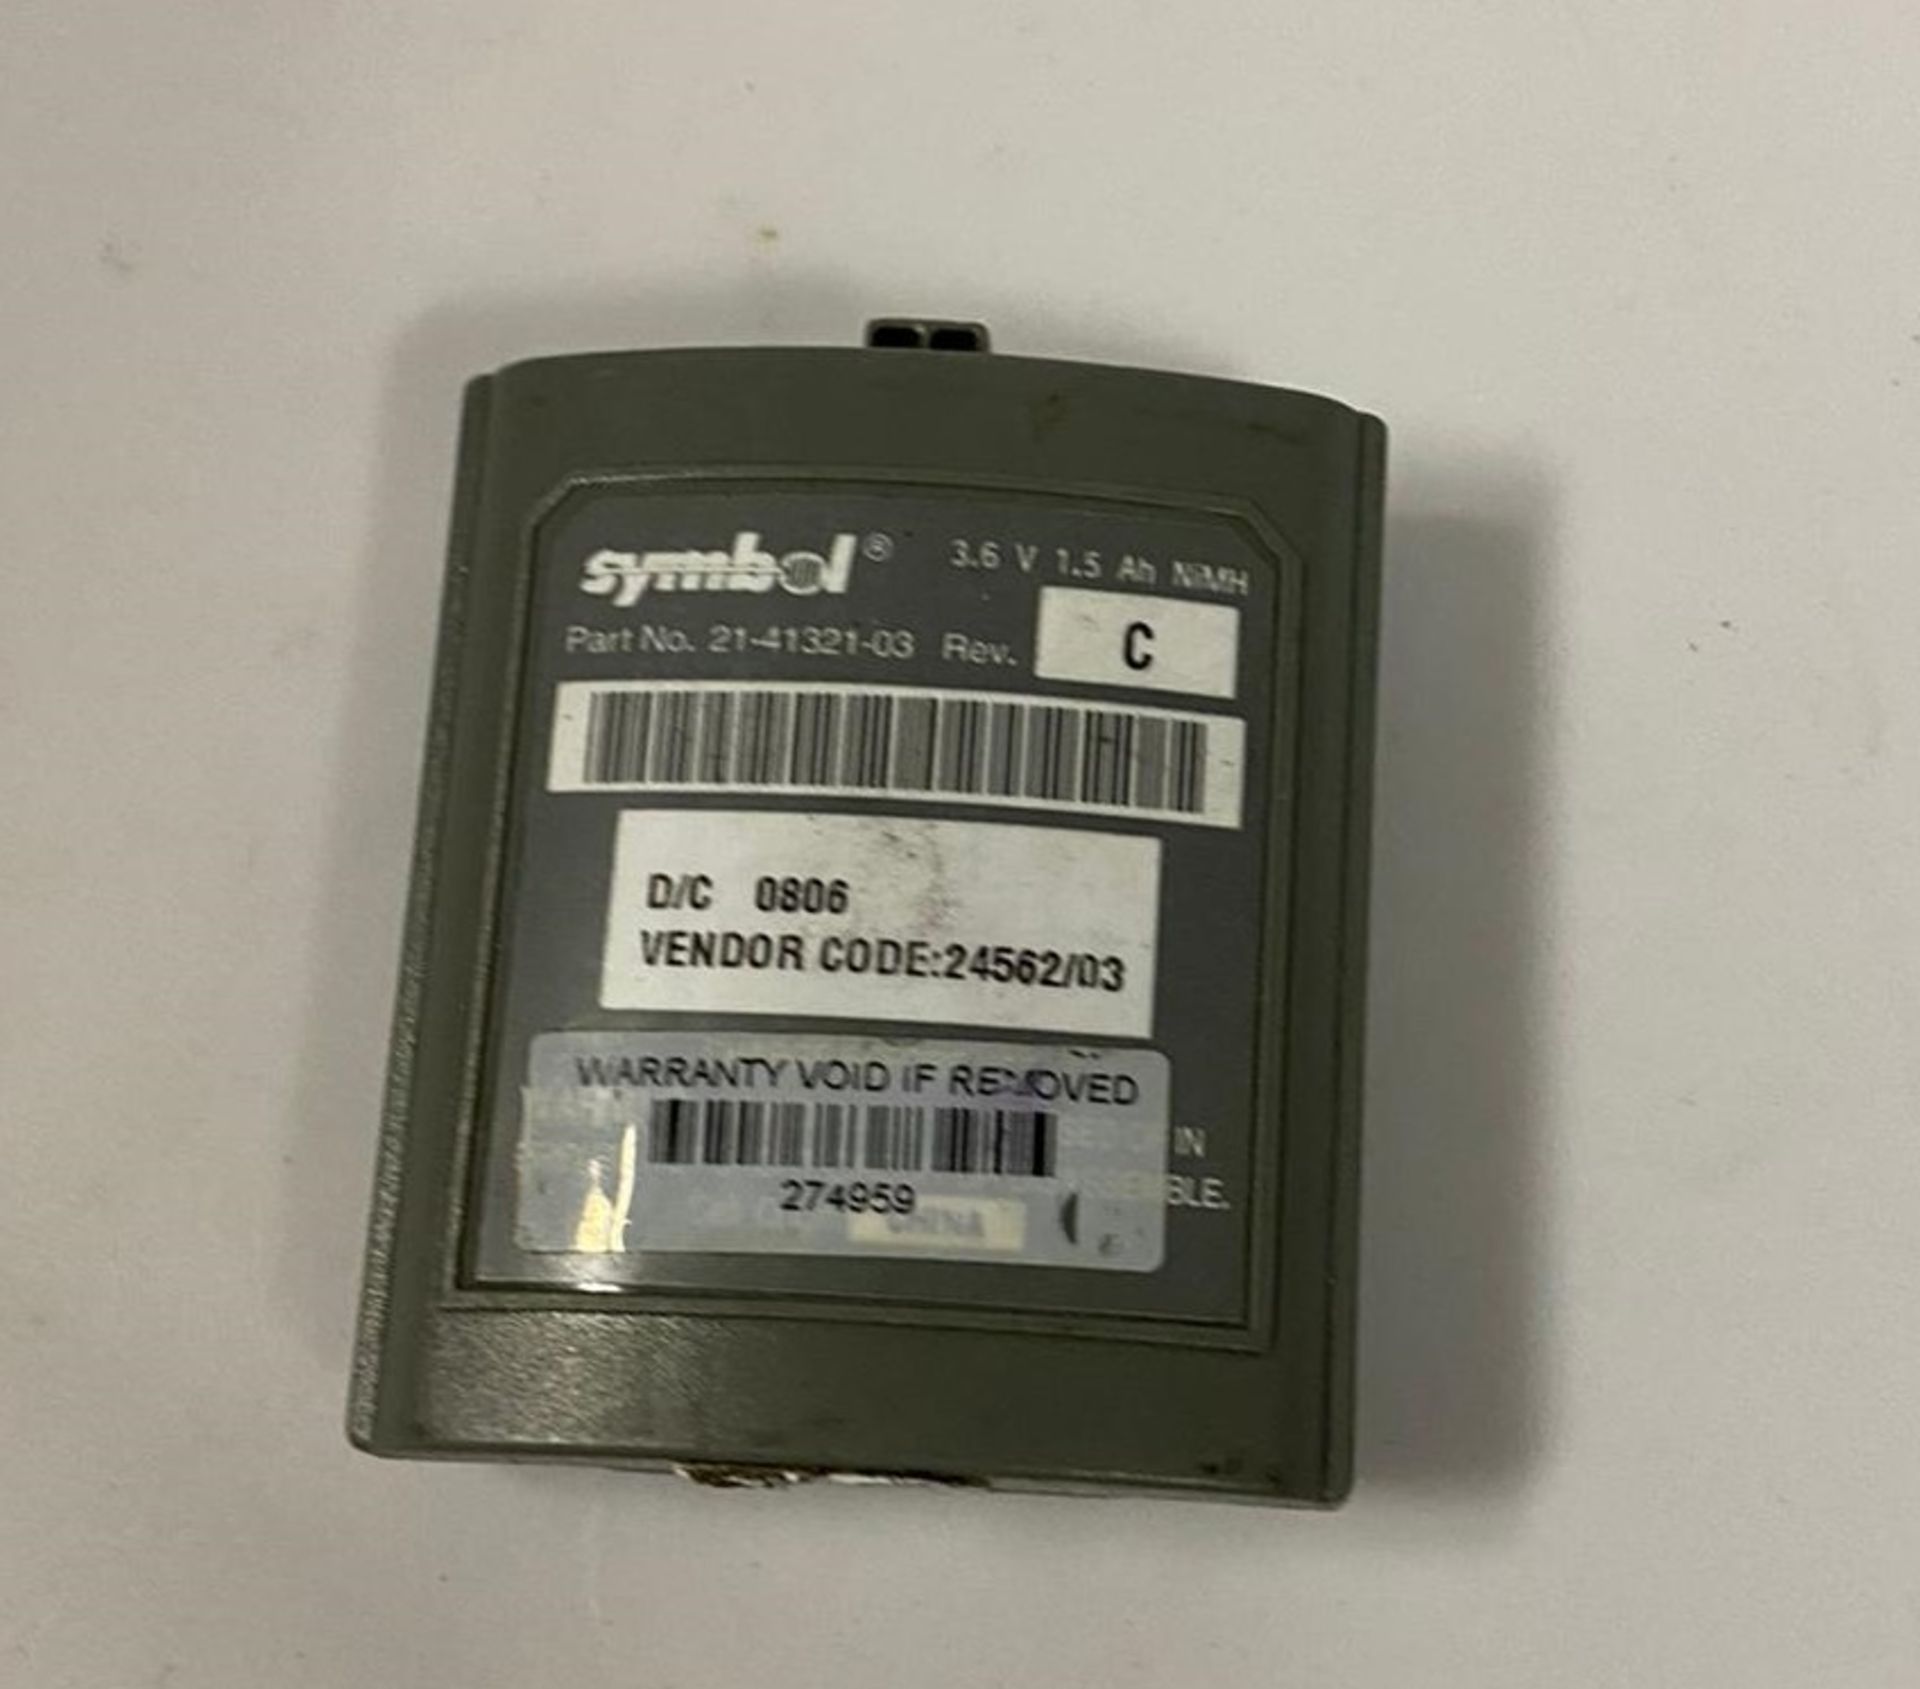 20 x Symbol Battery 21-4321-03 - Used Condition - Location: Altrincham WA14 -